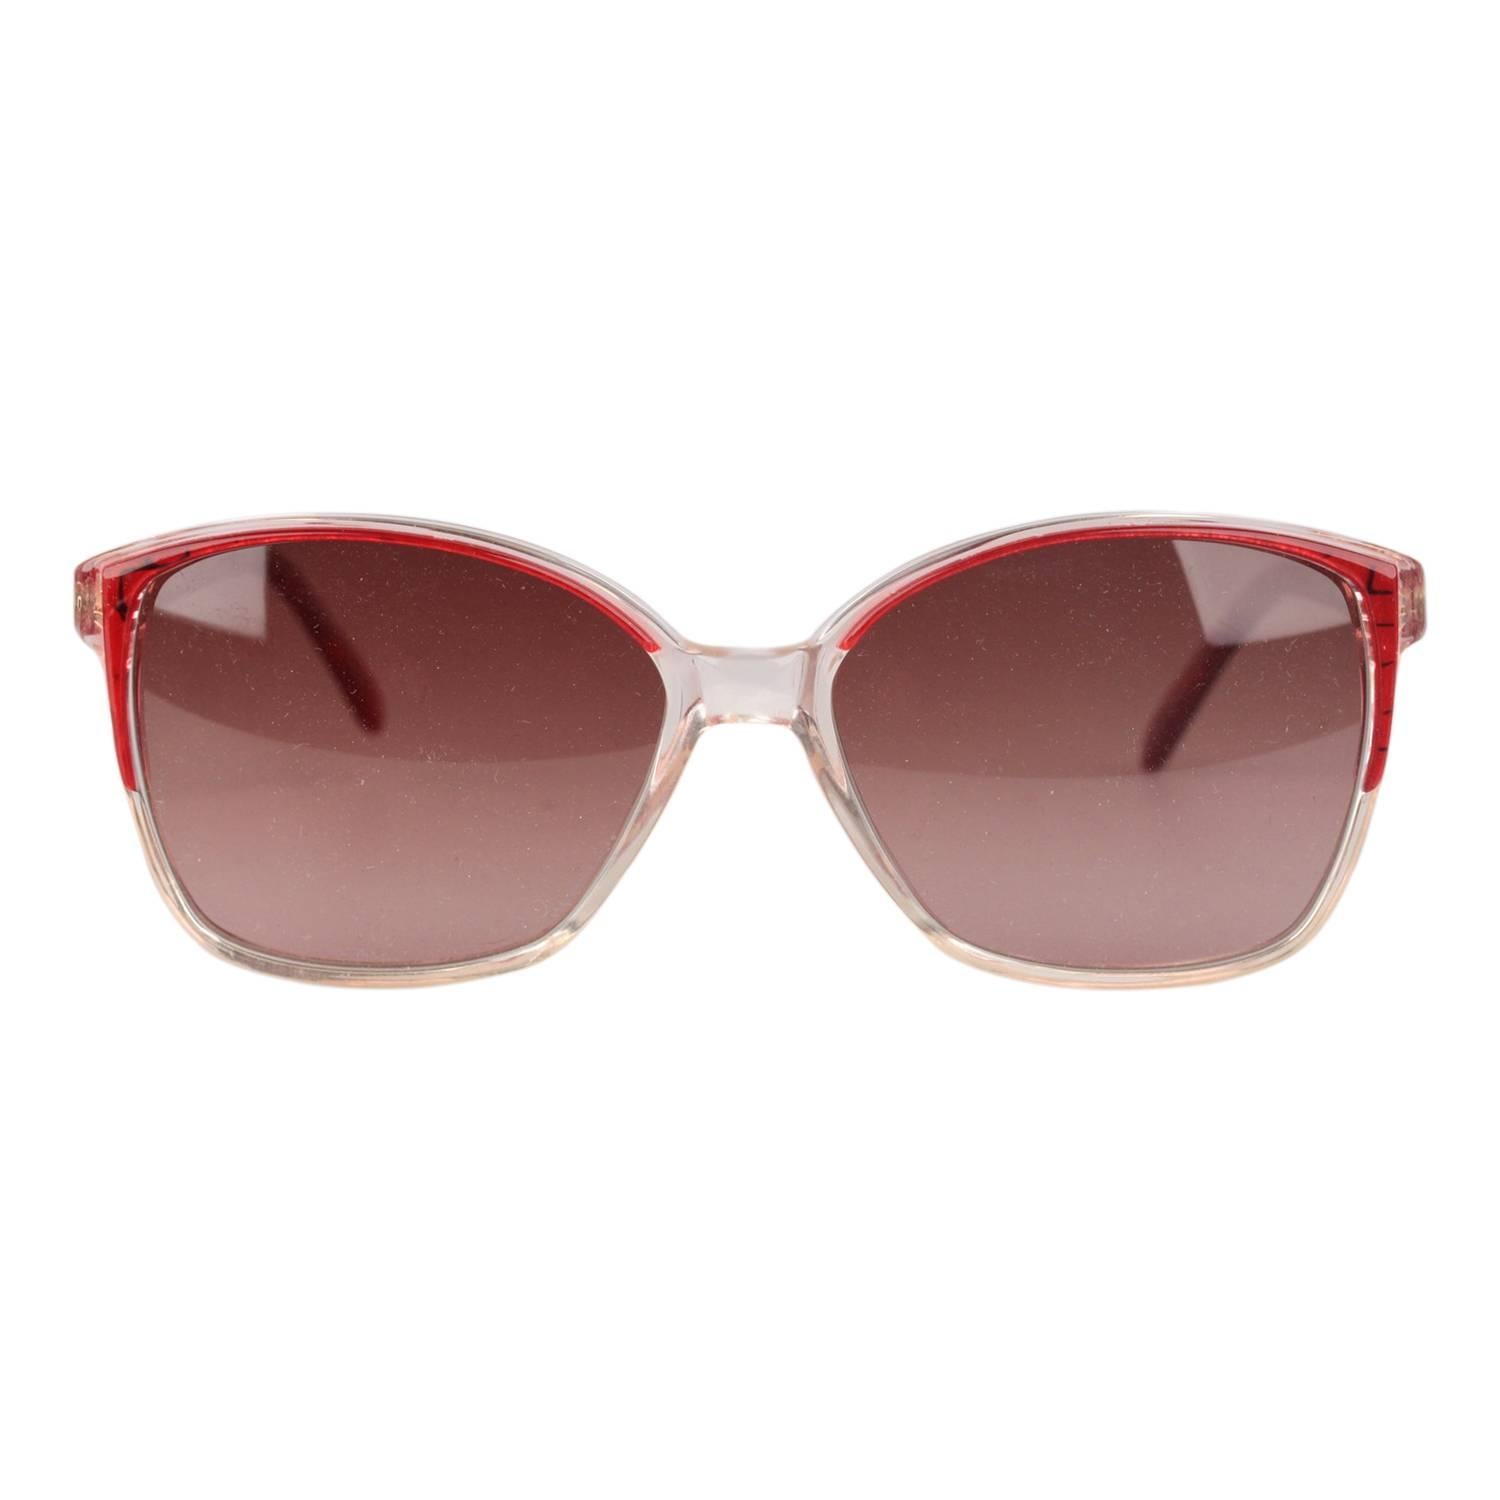 Yves Saint Laurent Alcmene 57-15mm Vintage Marbled Sunglasses 